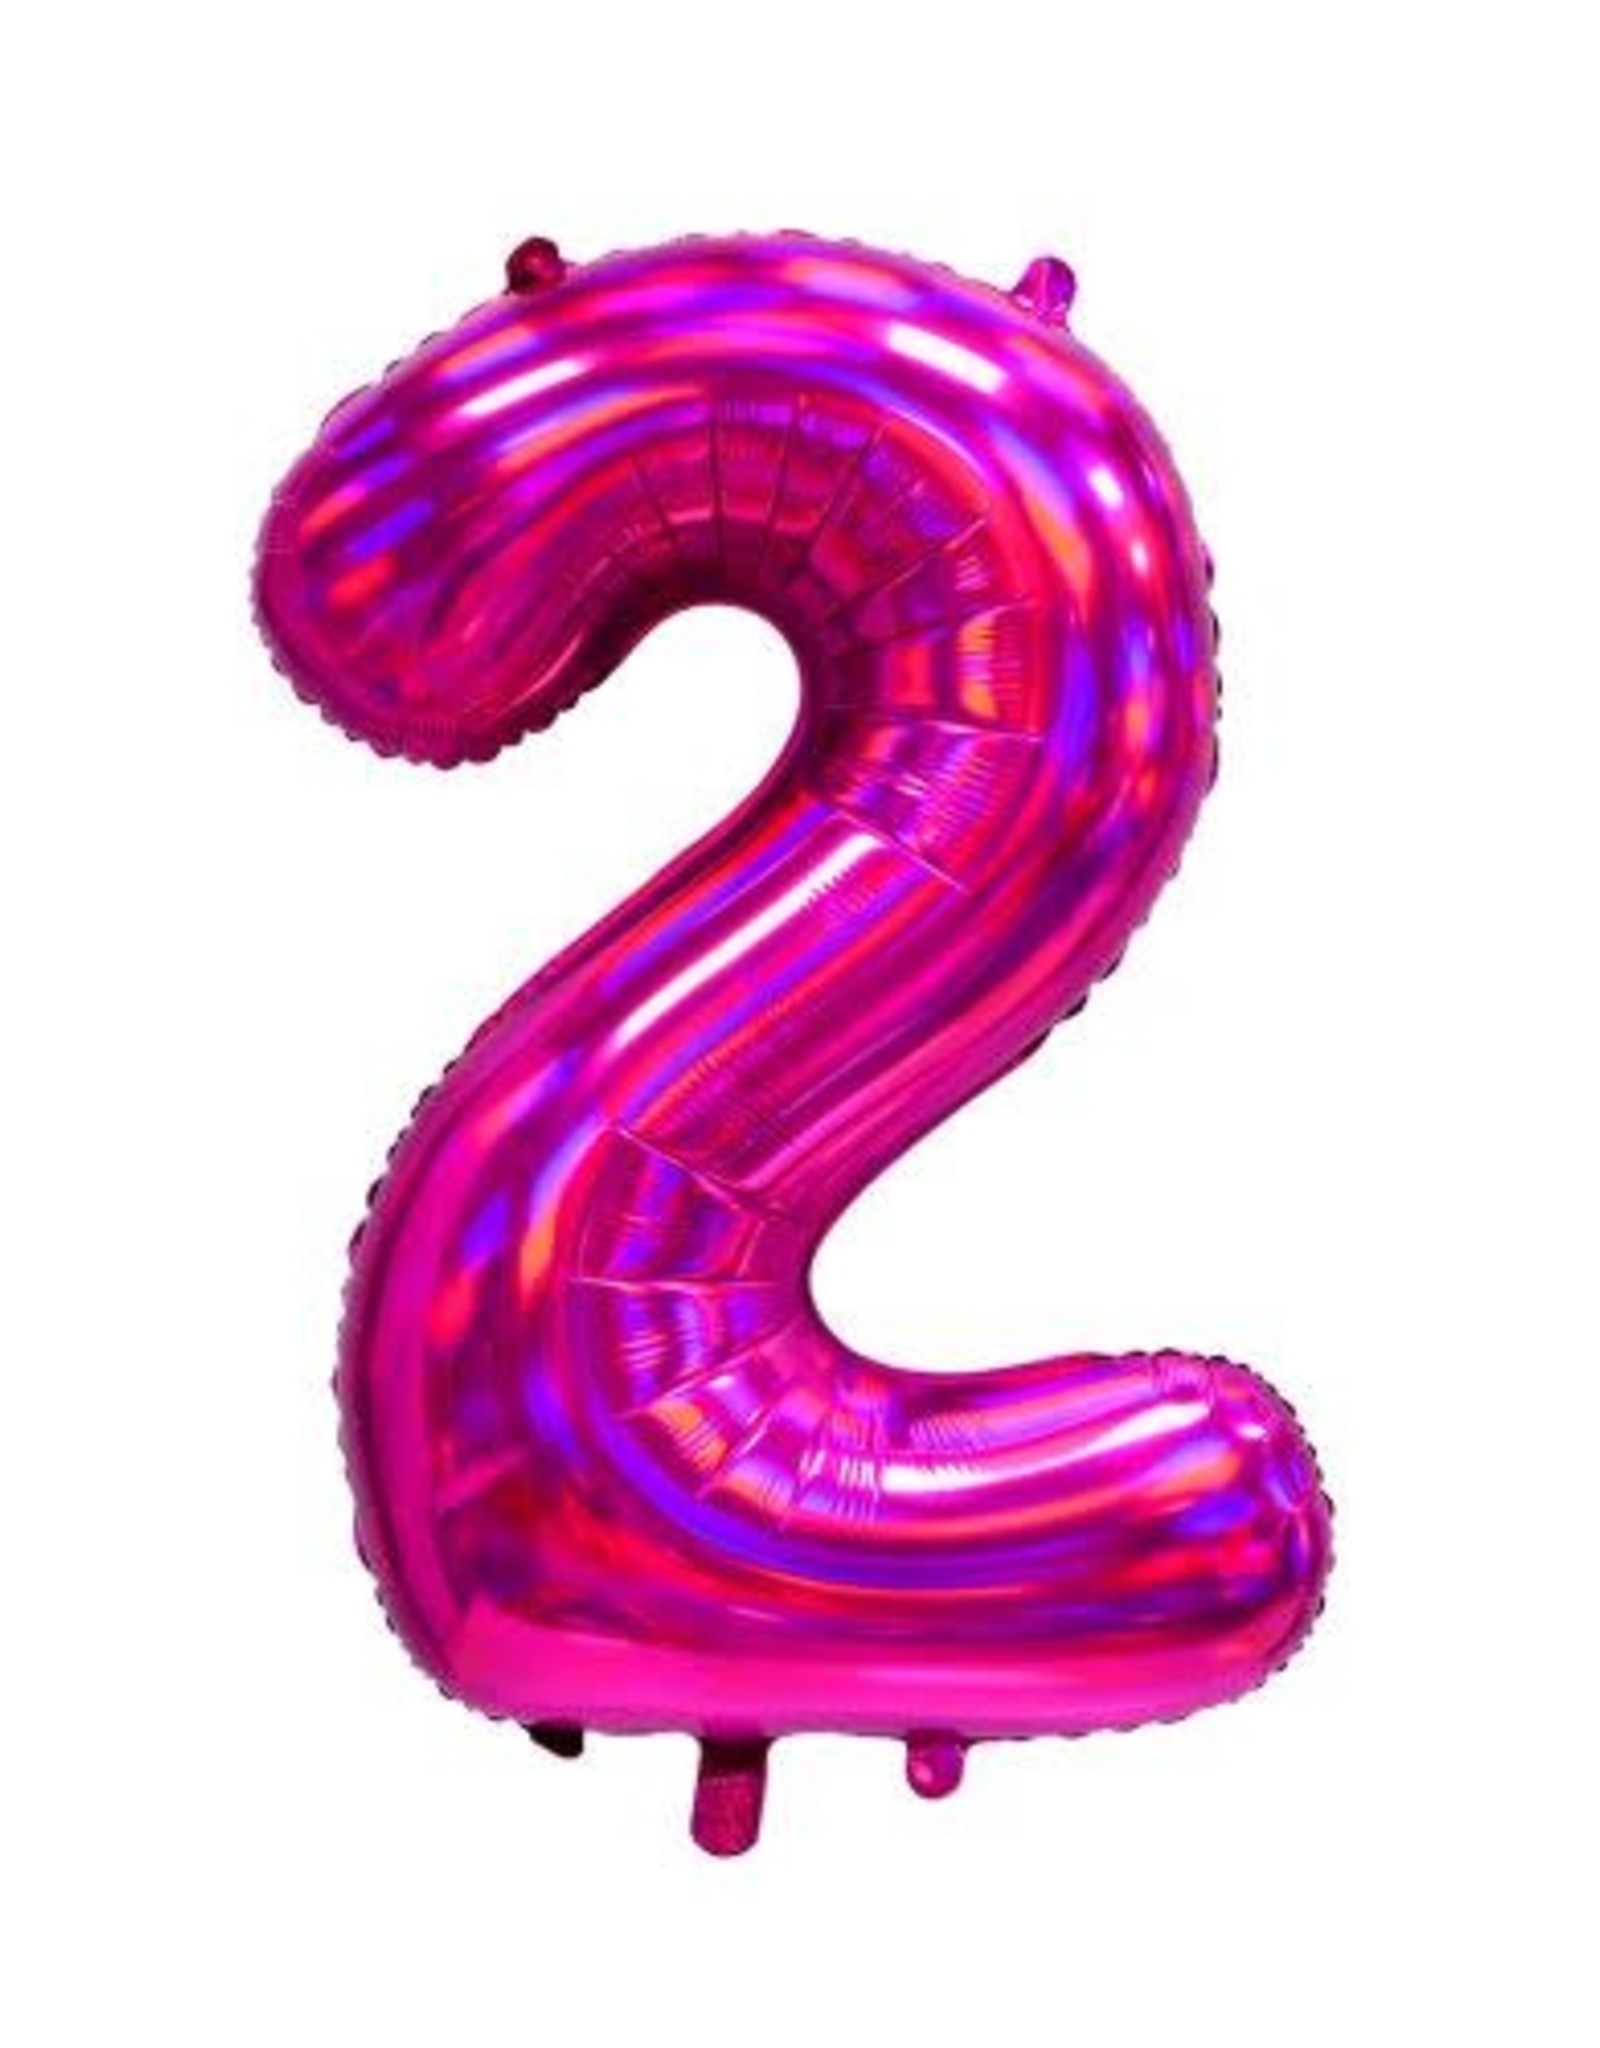 34" Iridescent Pink Mylar Number Balloons